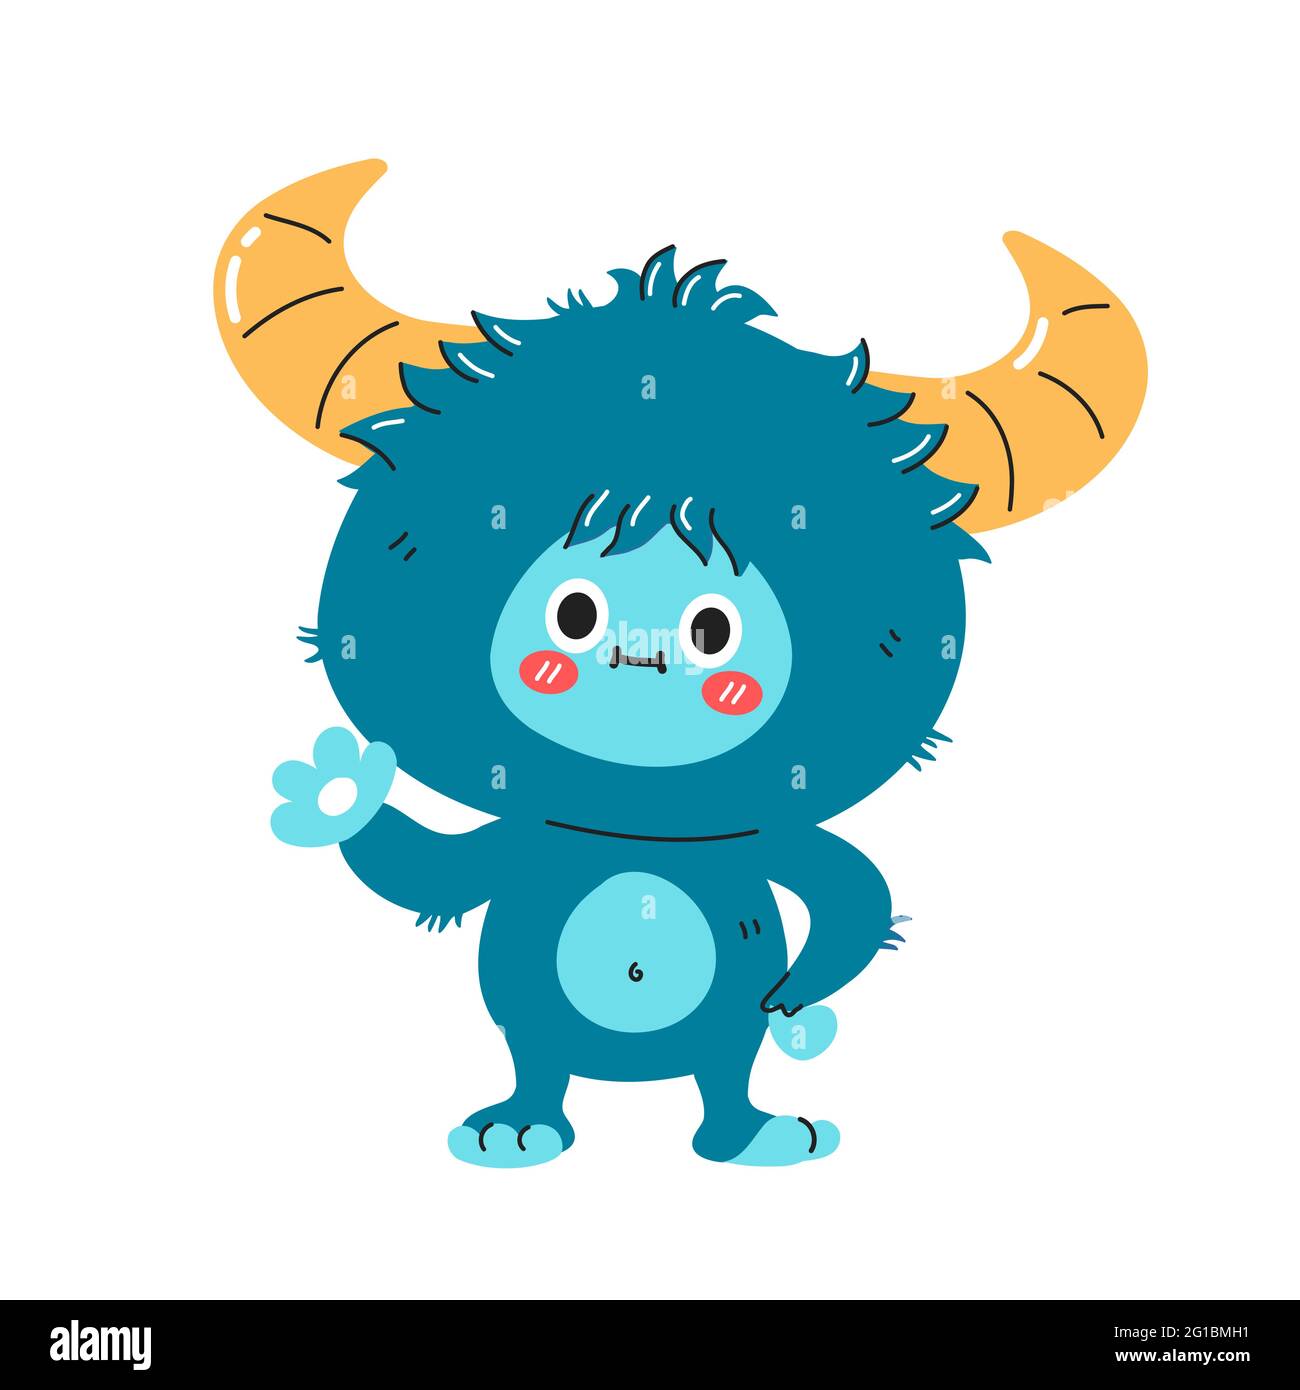 Cute funny yeti monster character. Vector hand drawn cartoon kawaii